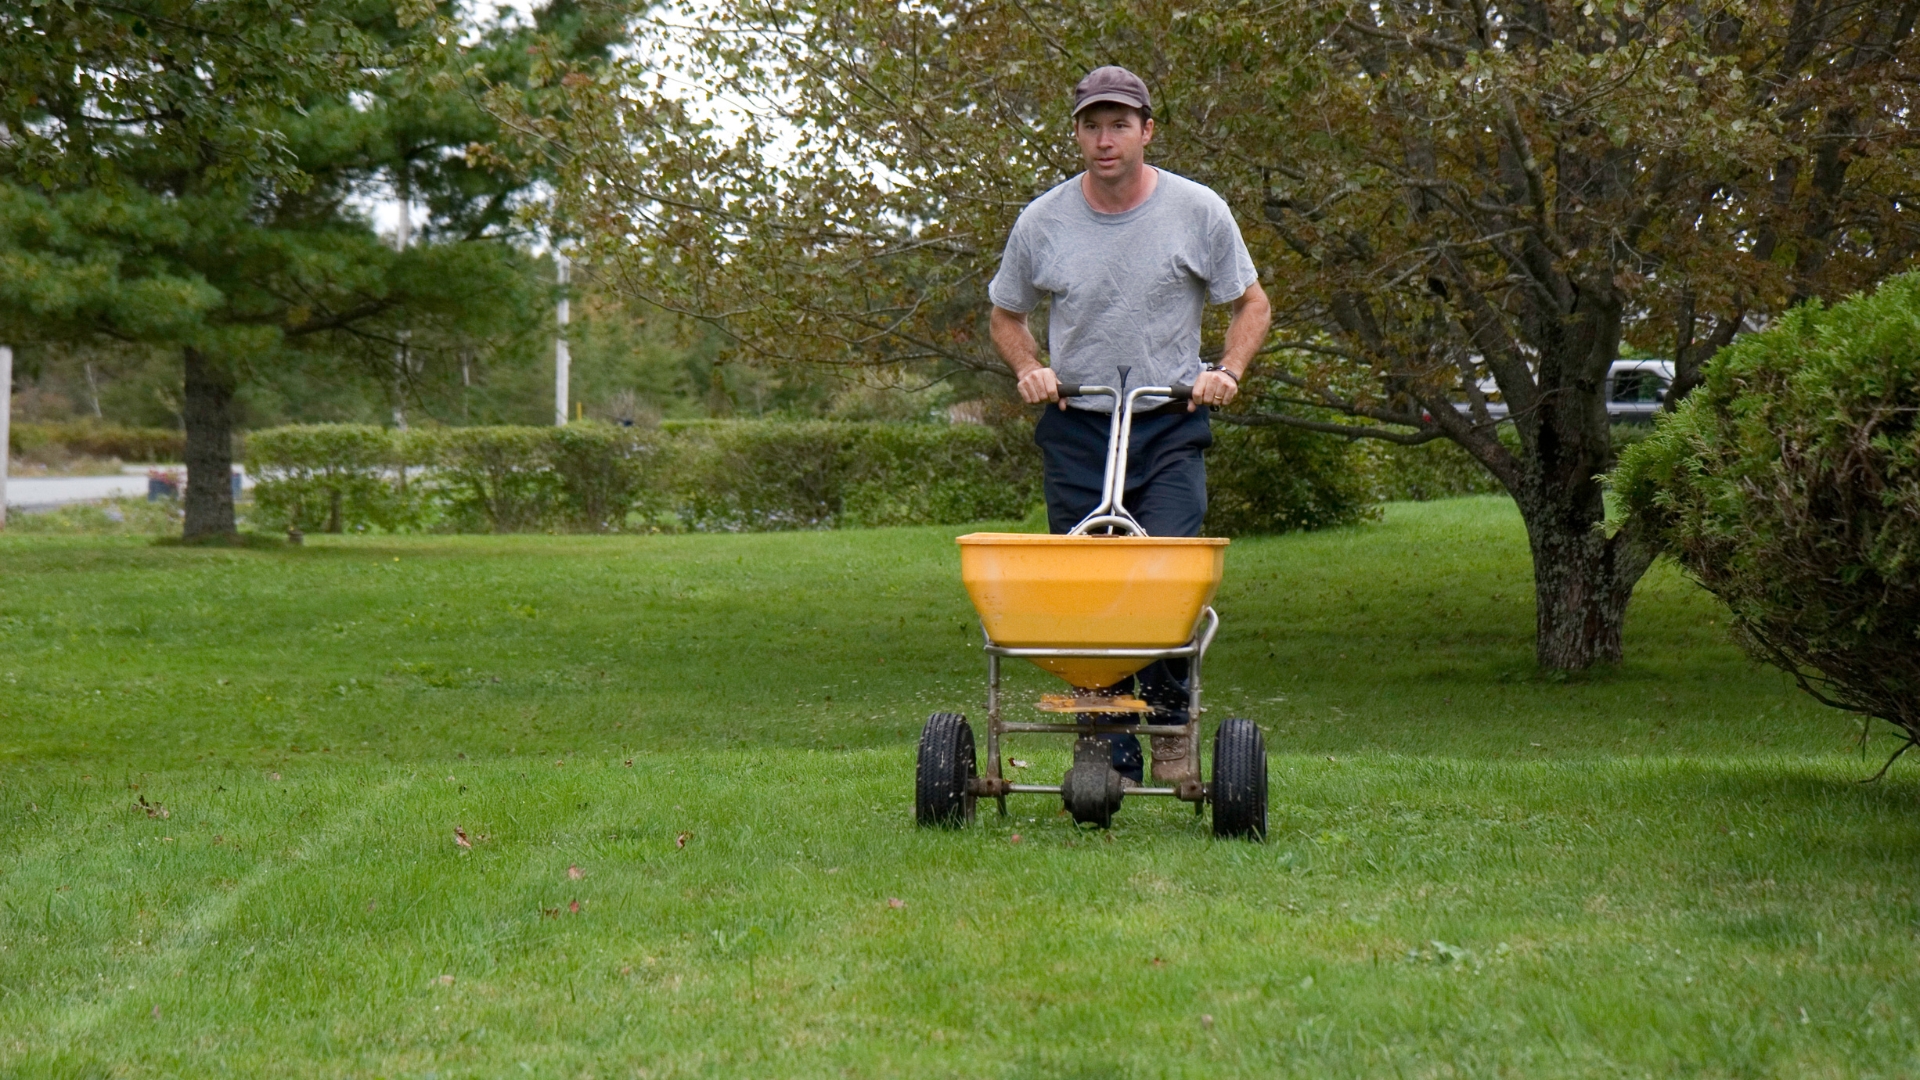 guy fertilizing a lawn